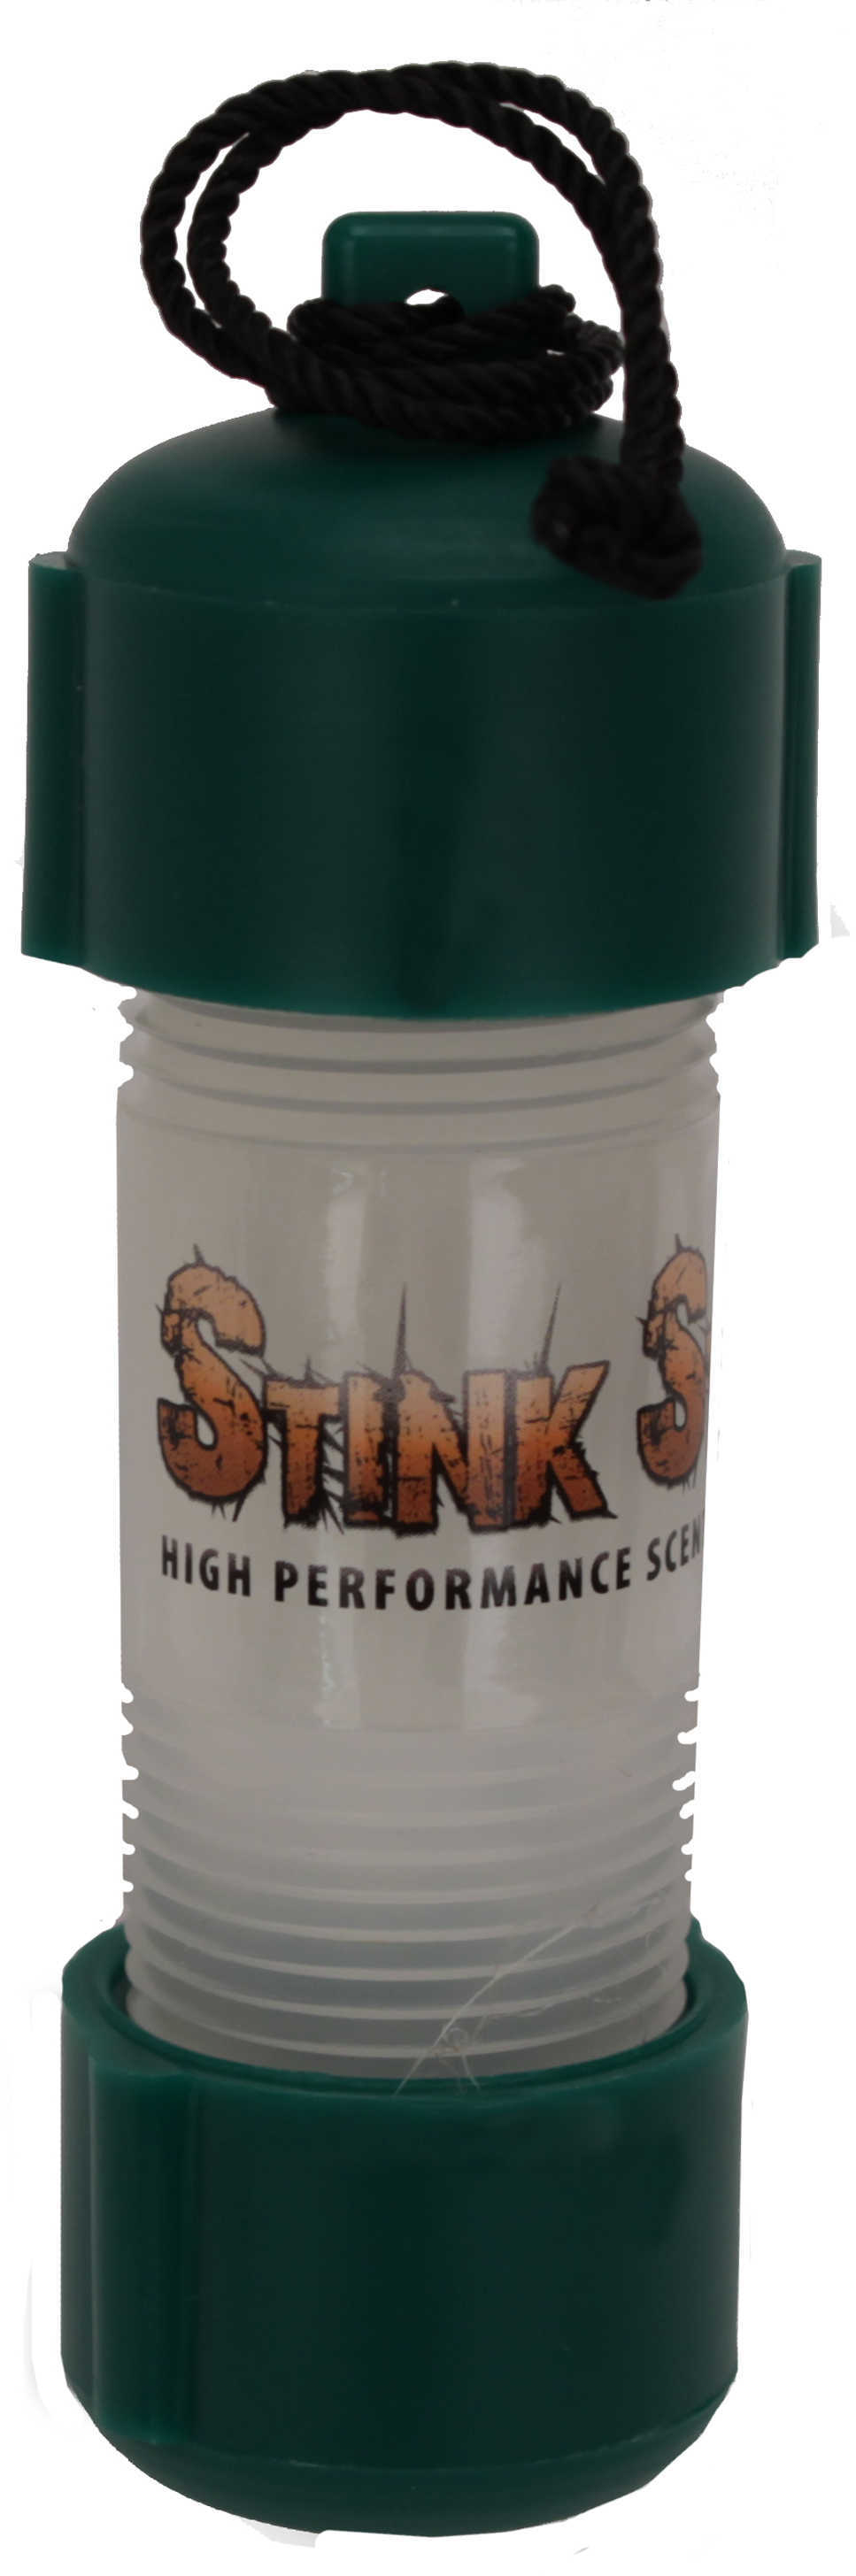 ConQuest Stink Stick Dispenser Green 1 pk. Model: 16001